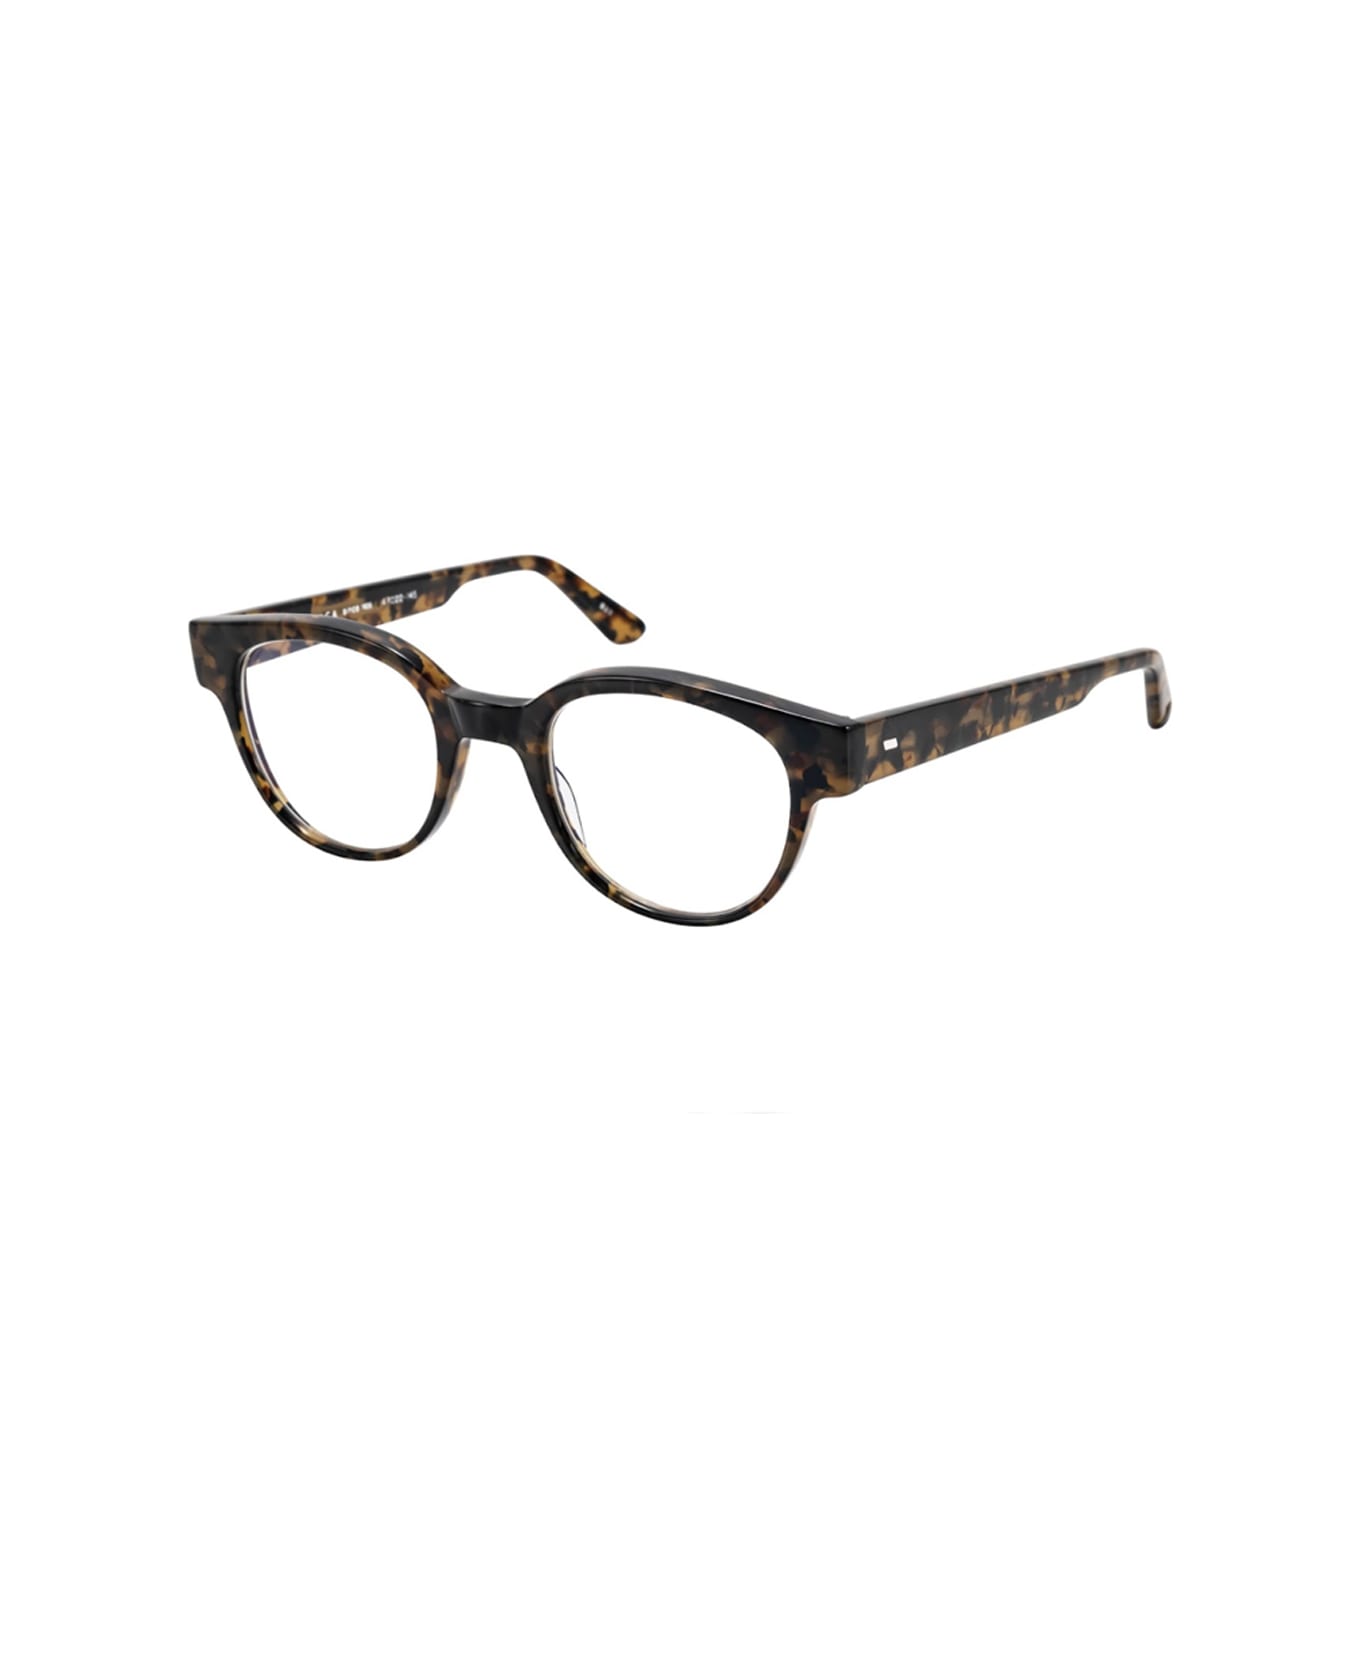 Masunaga Kk 87u Glasses - Marrone